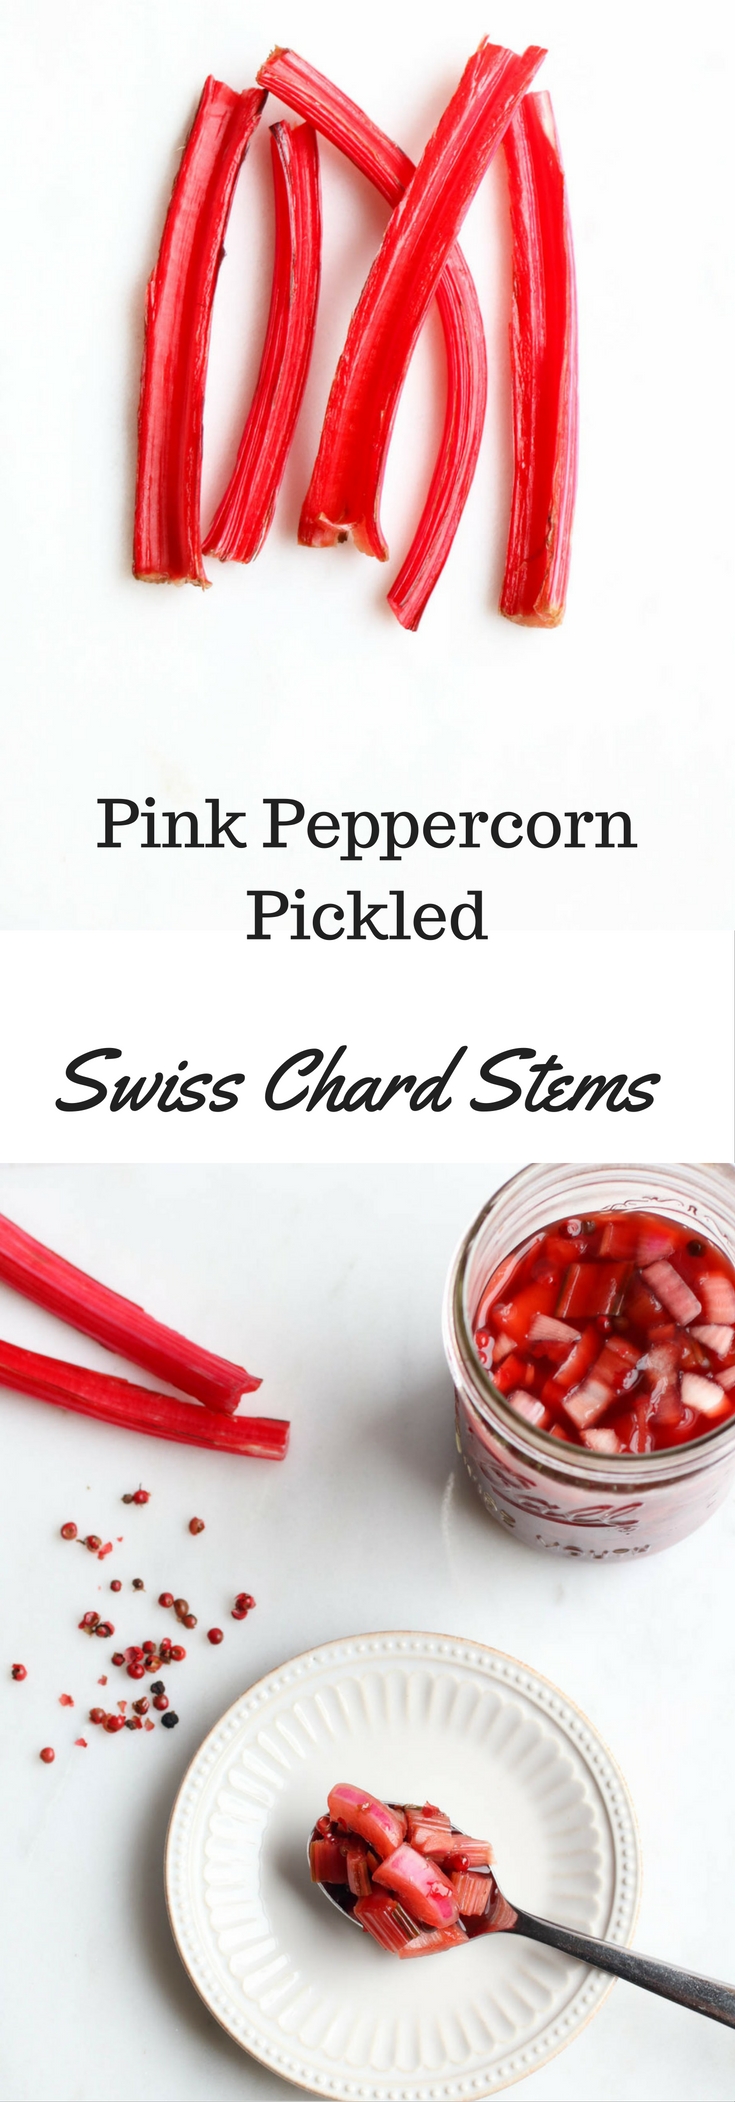 Pink Peppercorn Pickled Swiss Chard Stems - Abra's Kitchen